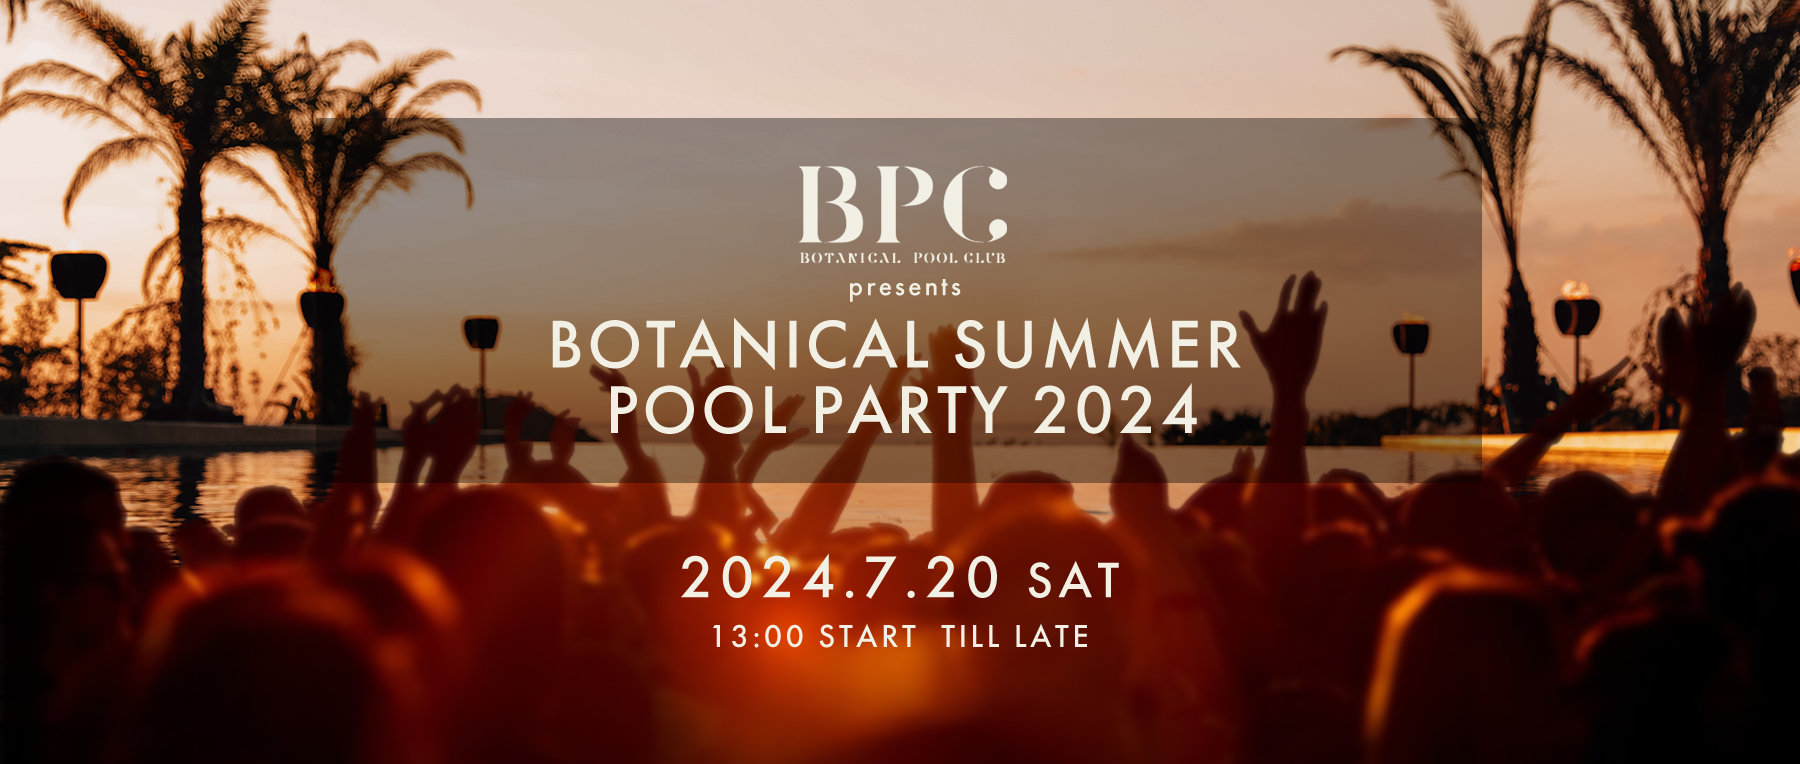 [Finished]Botanical Summer Pool Party 2024's images4